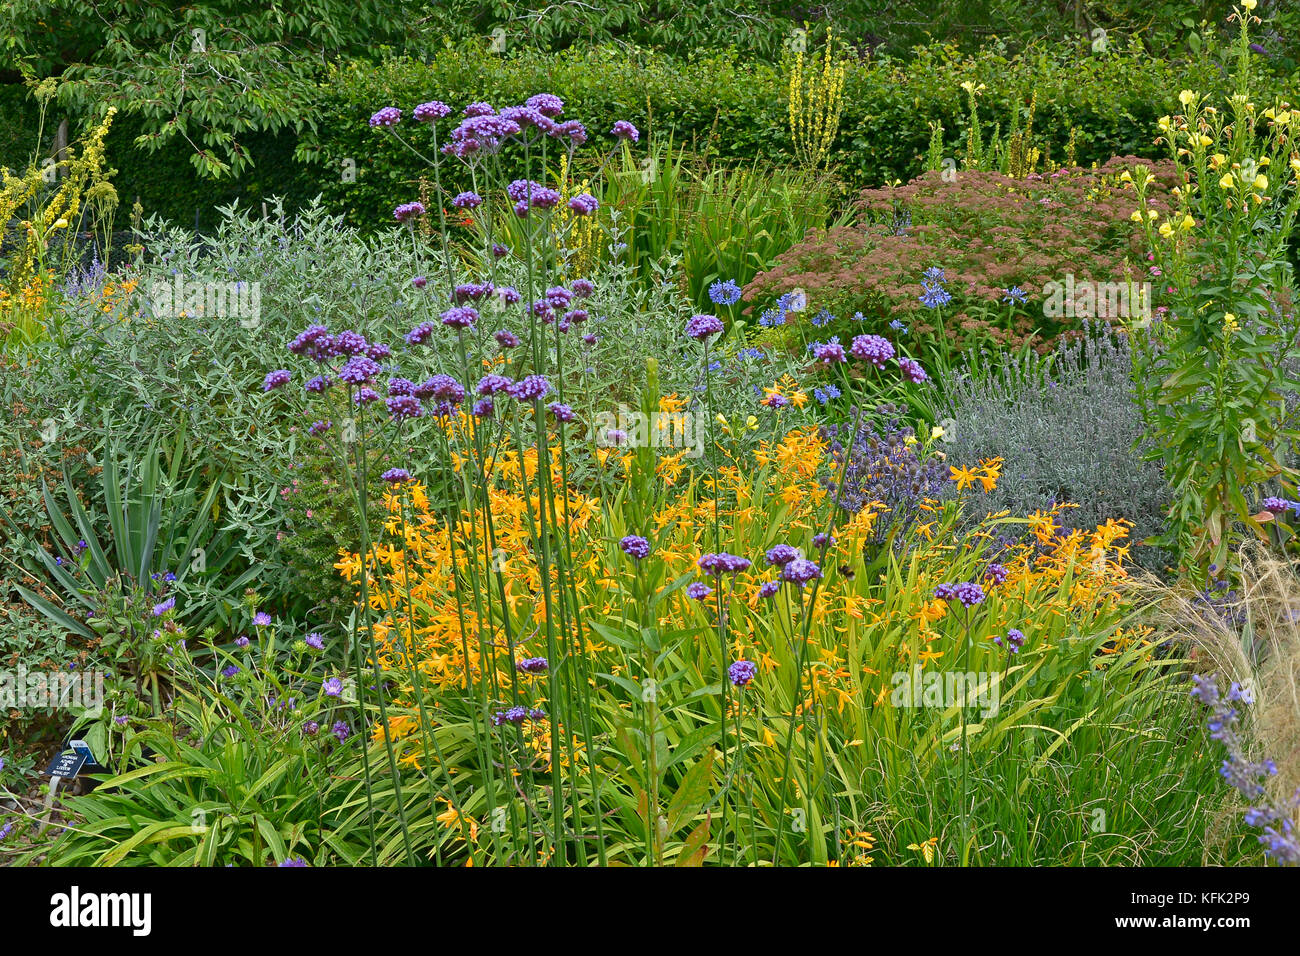 Garden flower border with Verbena Bonariensis, Crocosmia and Verbascum making a colourful display Stock Photo